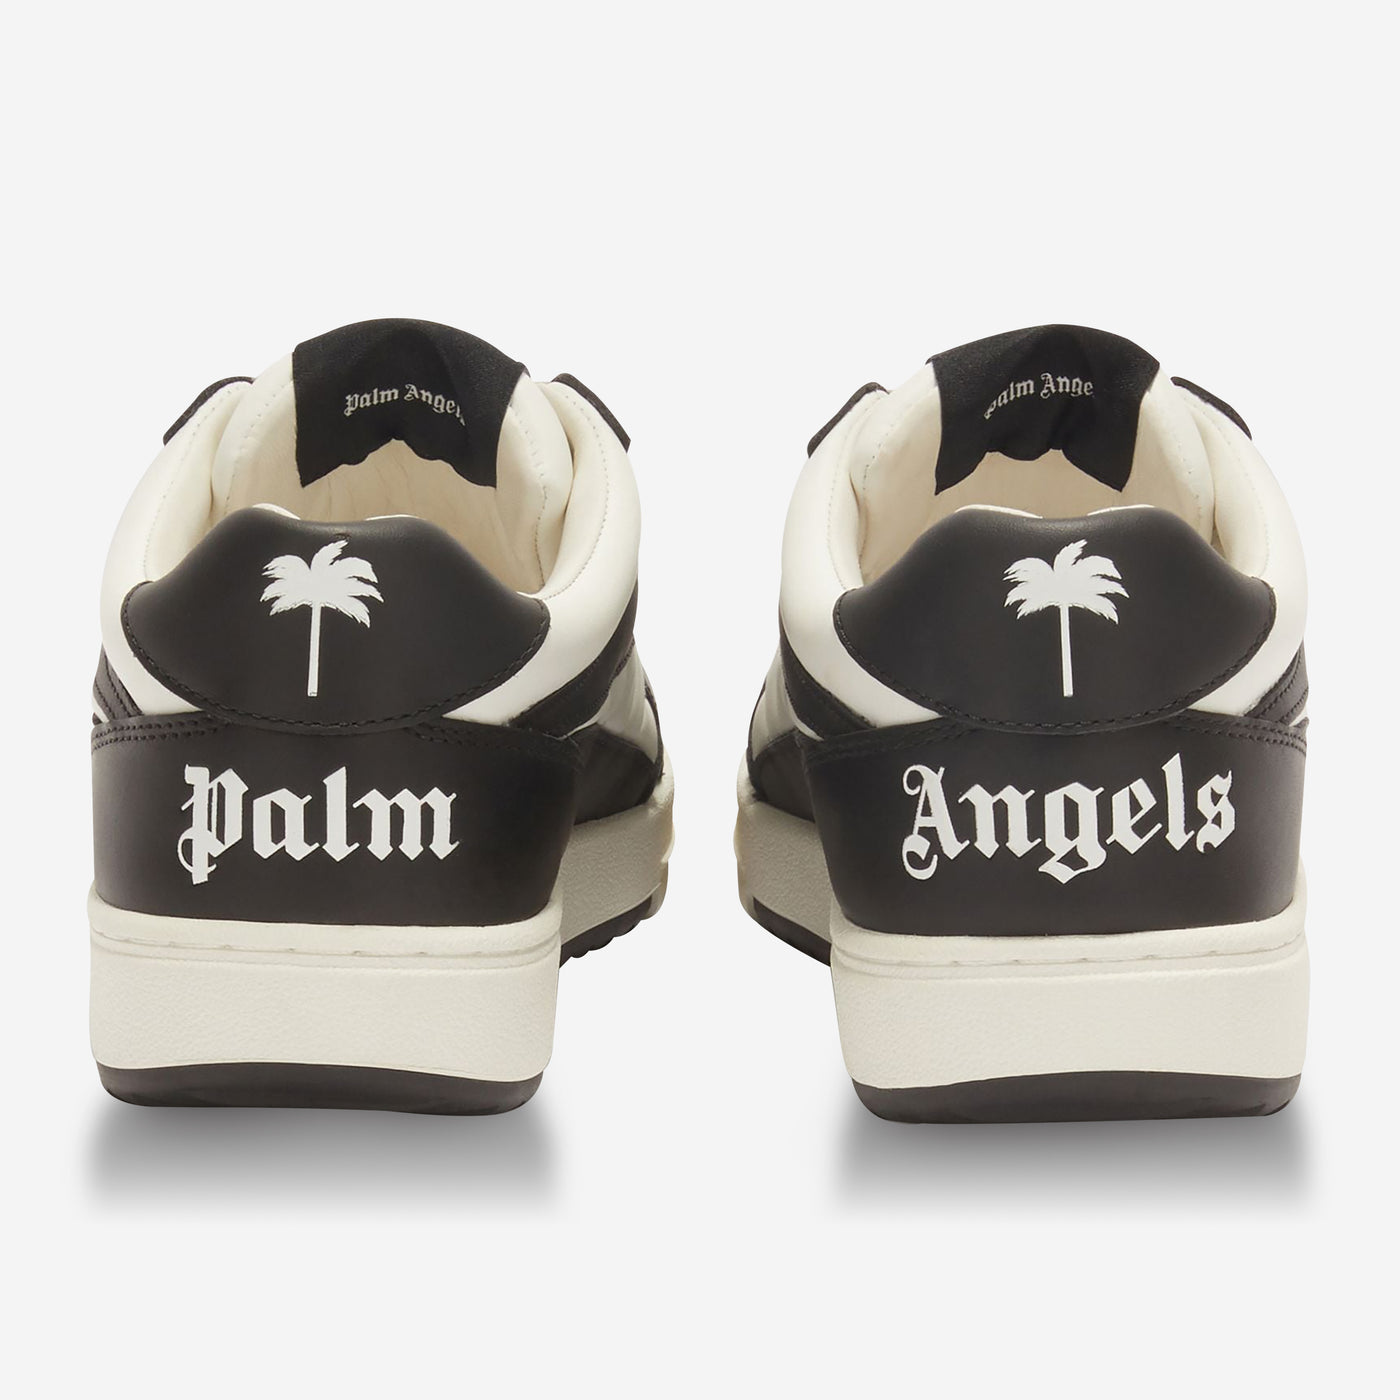 Palm Angels University Sneakers